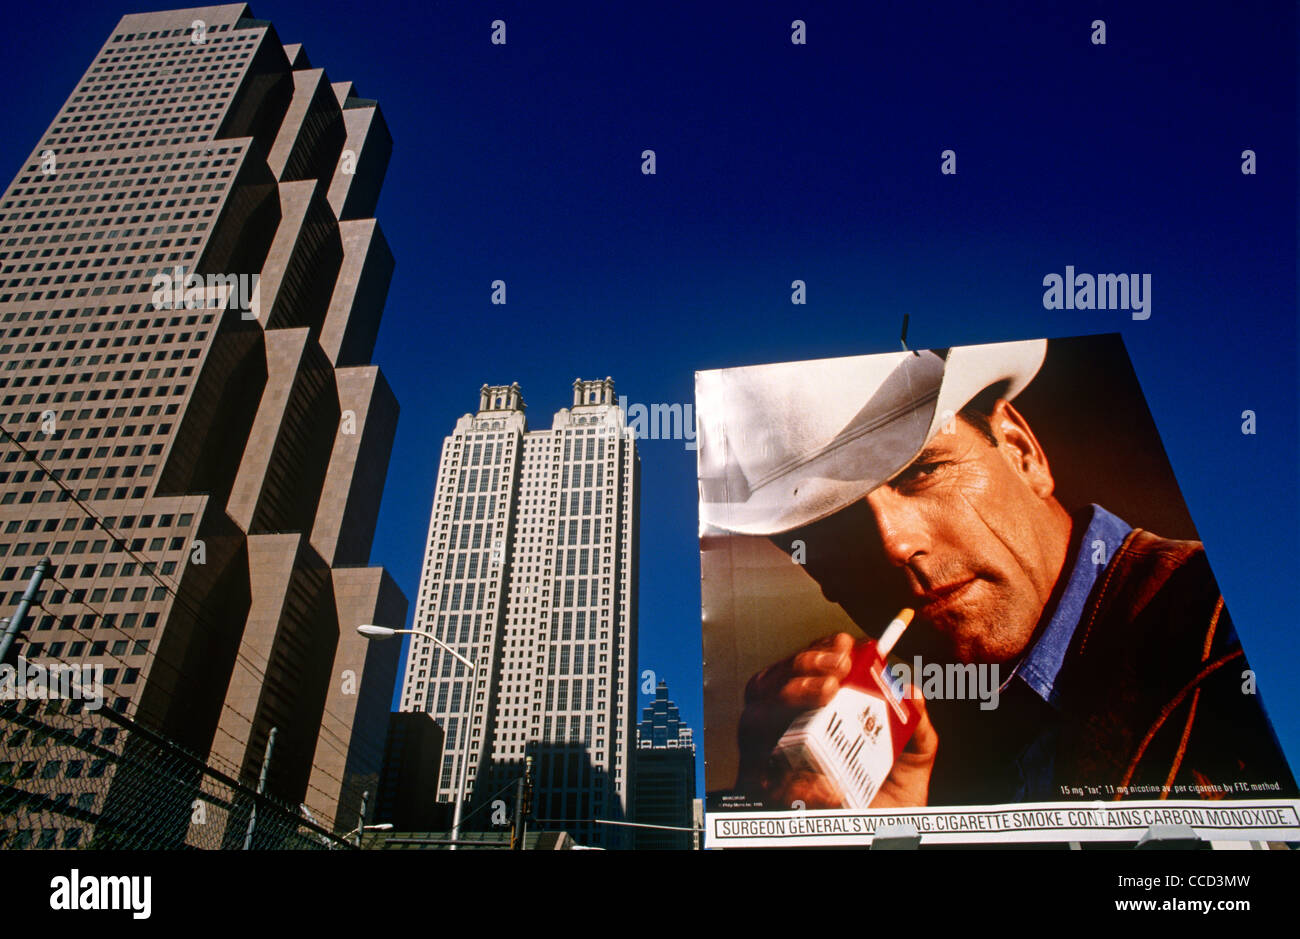 A Phillip Morris ad using the famous Marlboro Man cowboy character on a downtown Atlanta billboard. Stock Photo